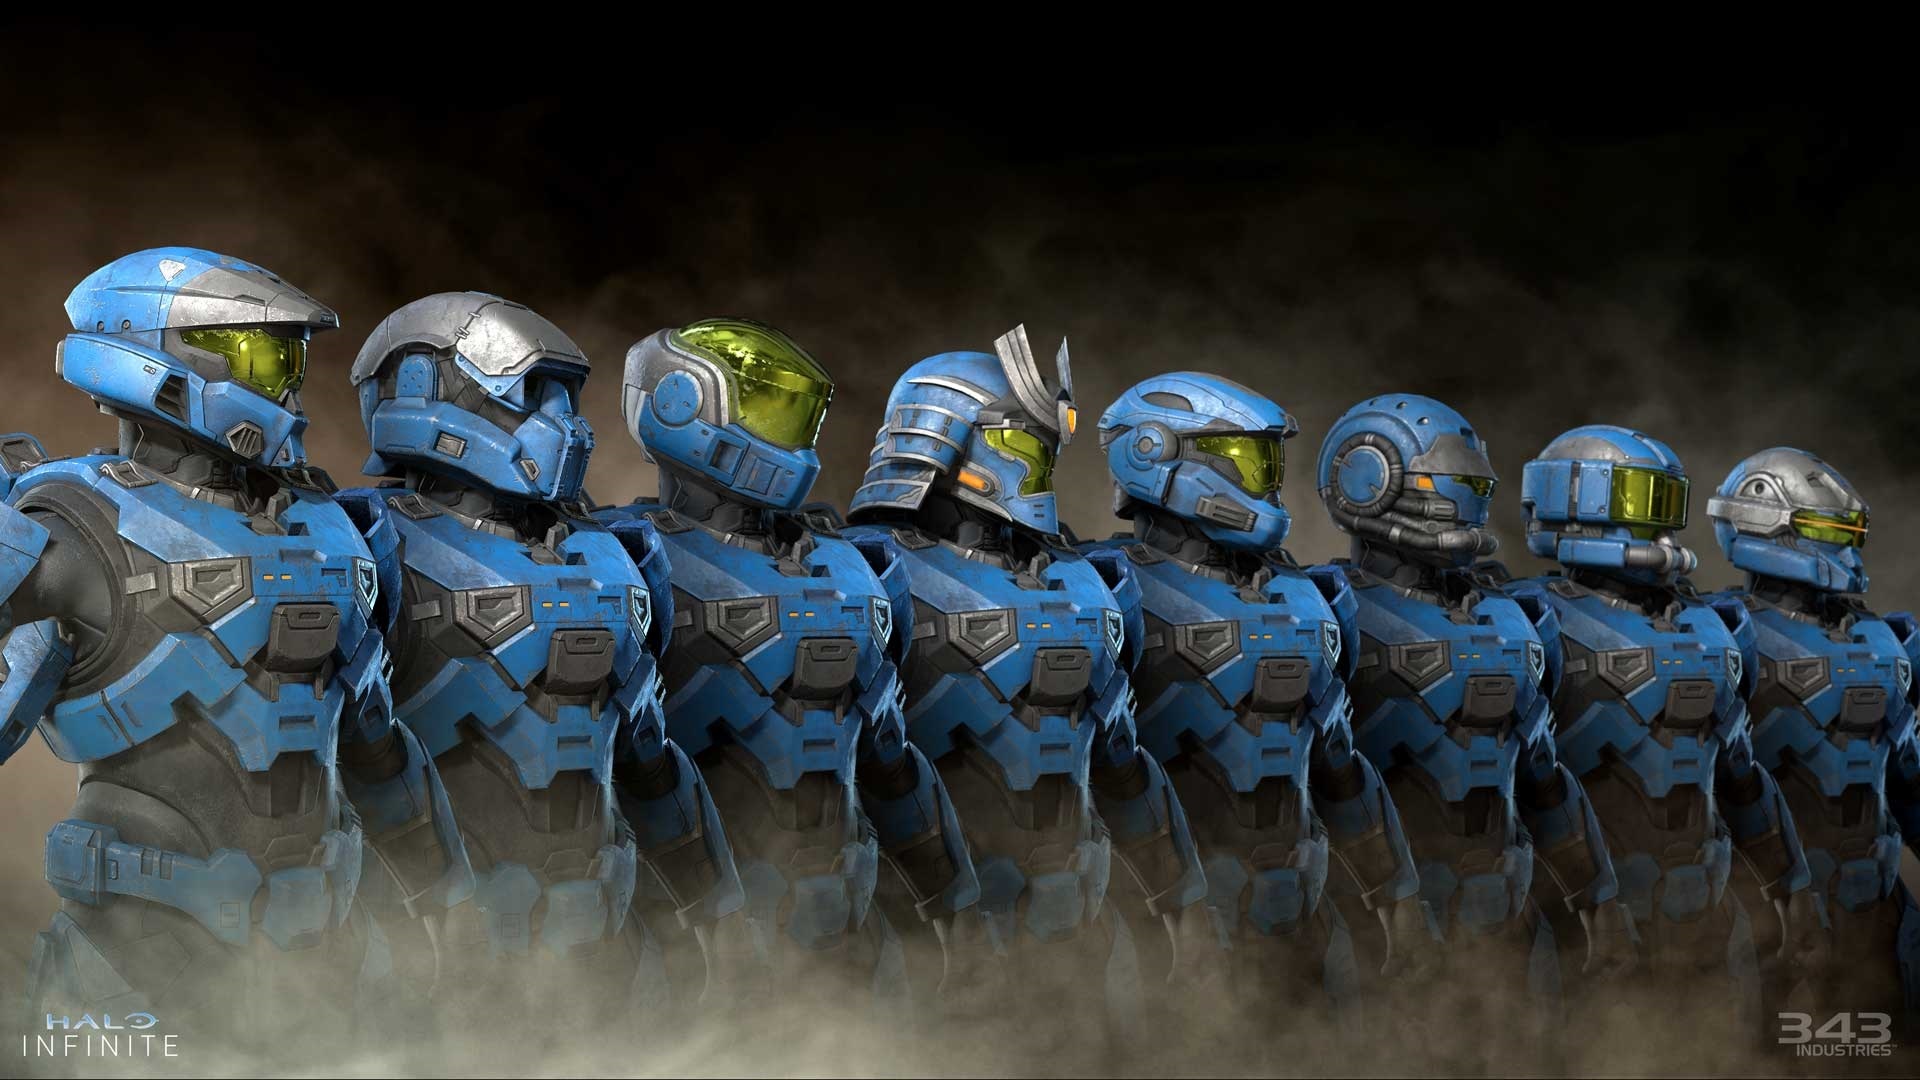 Halo Infinite season 5 release date: here's when the next season